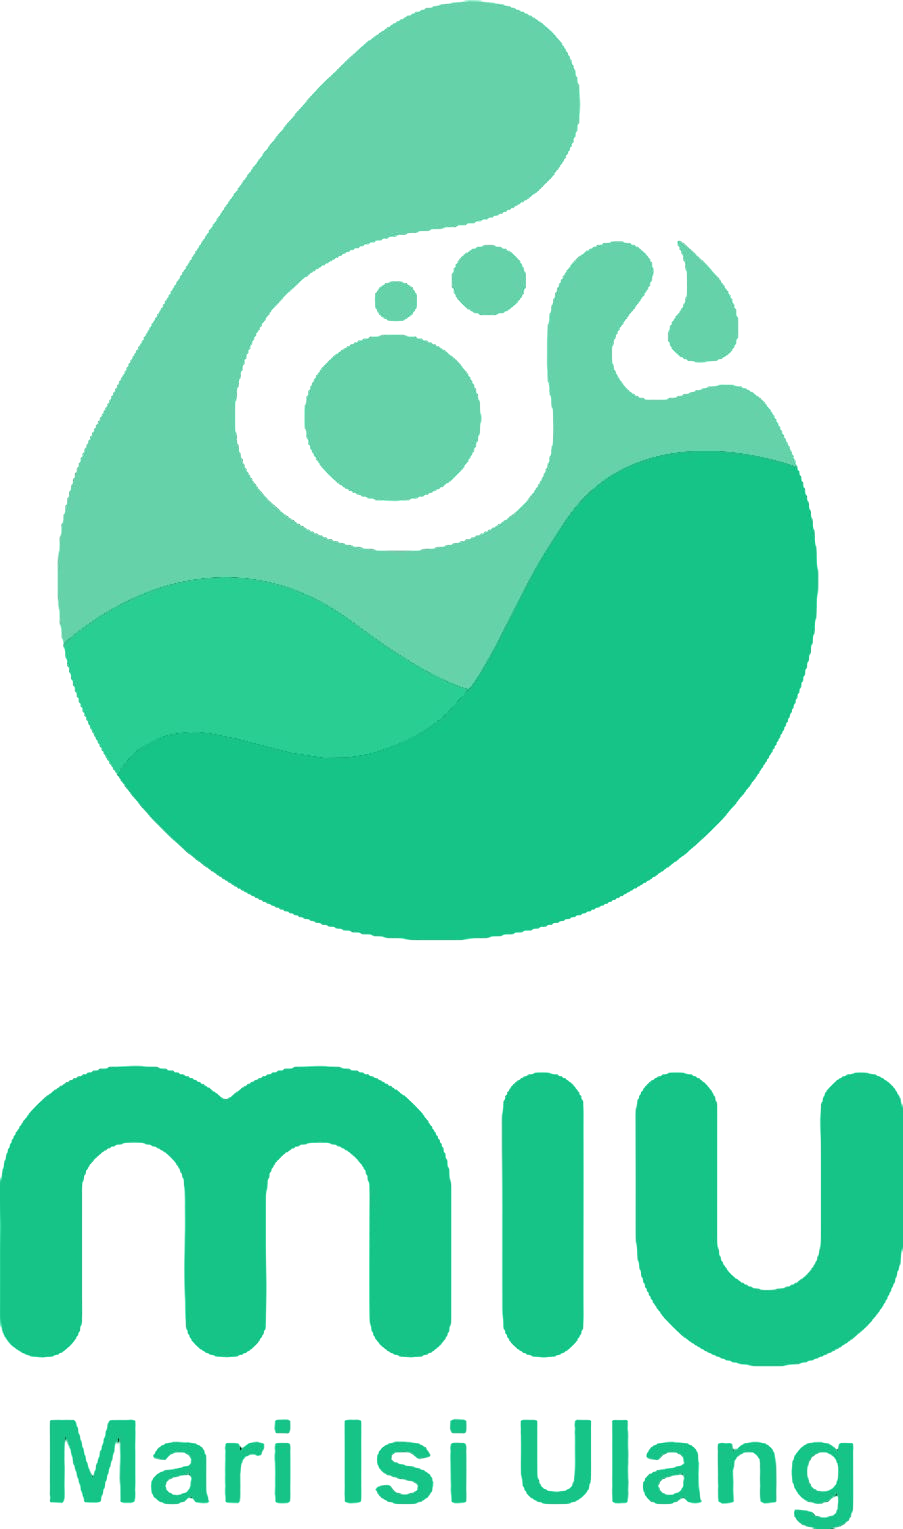 MIU dark logo